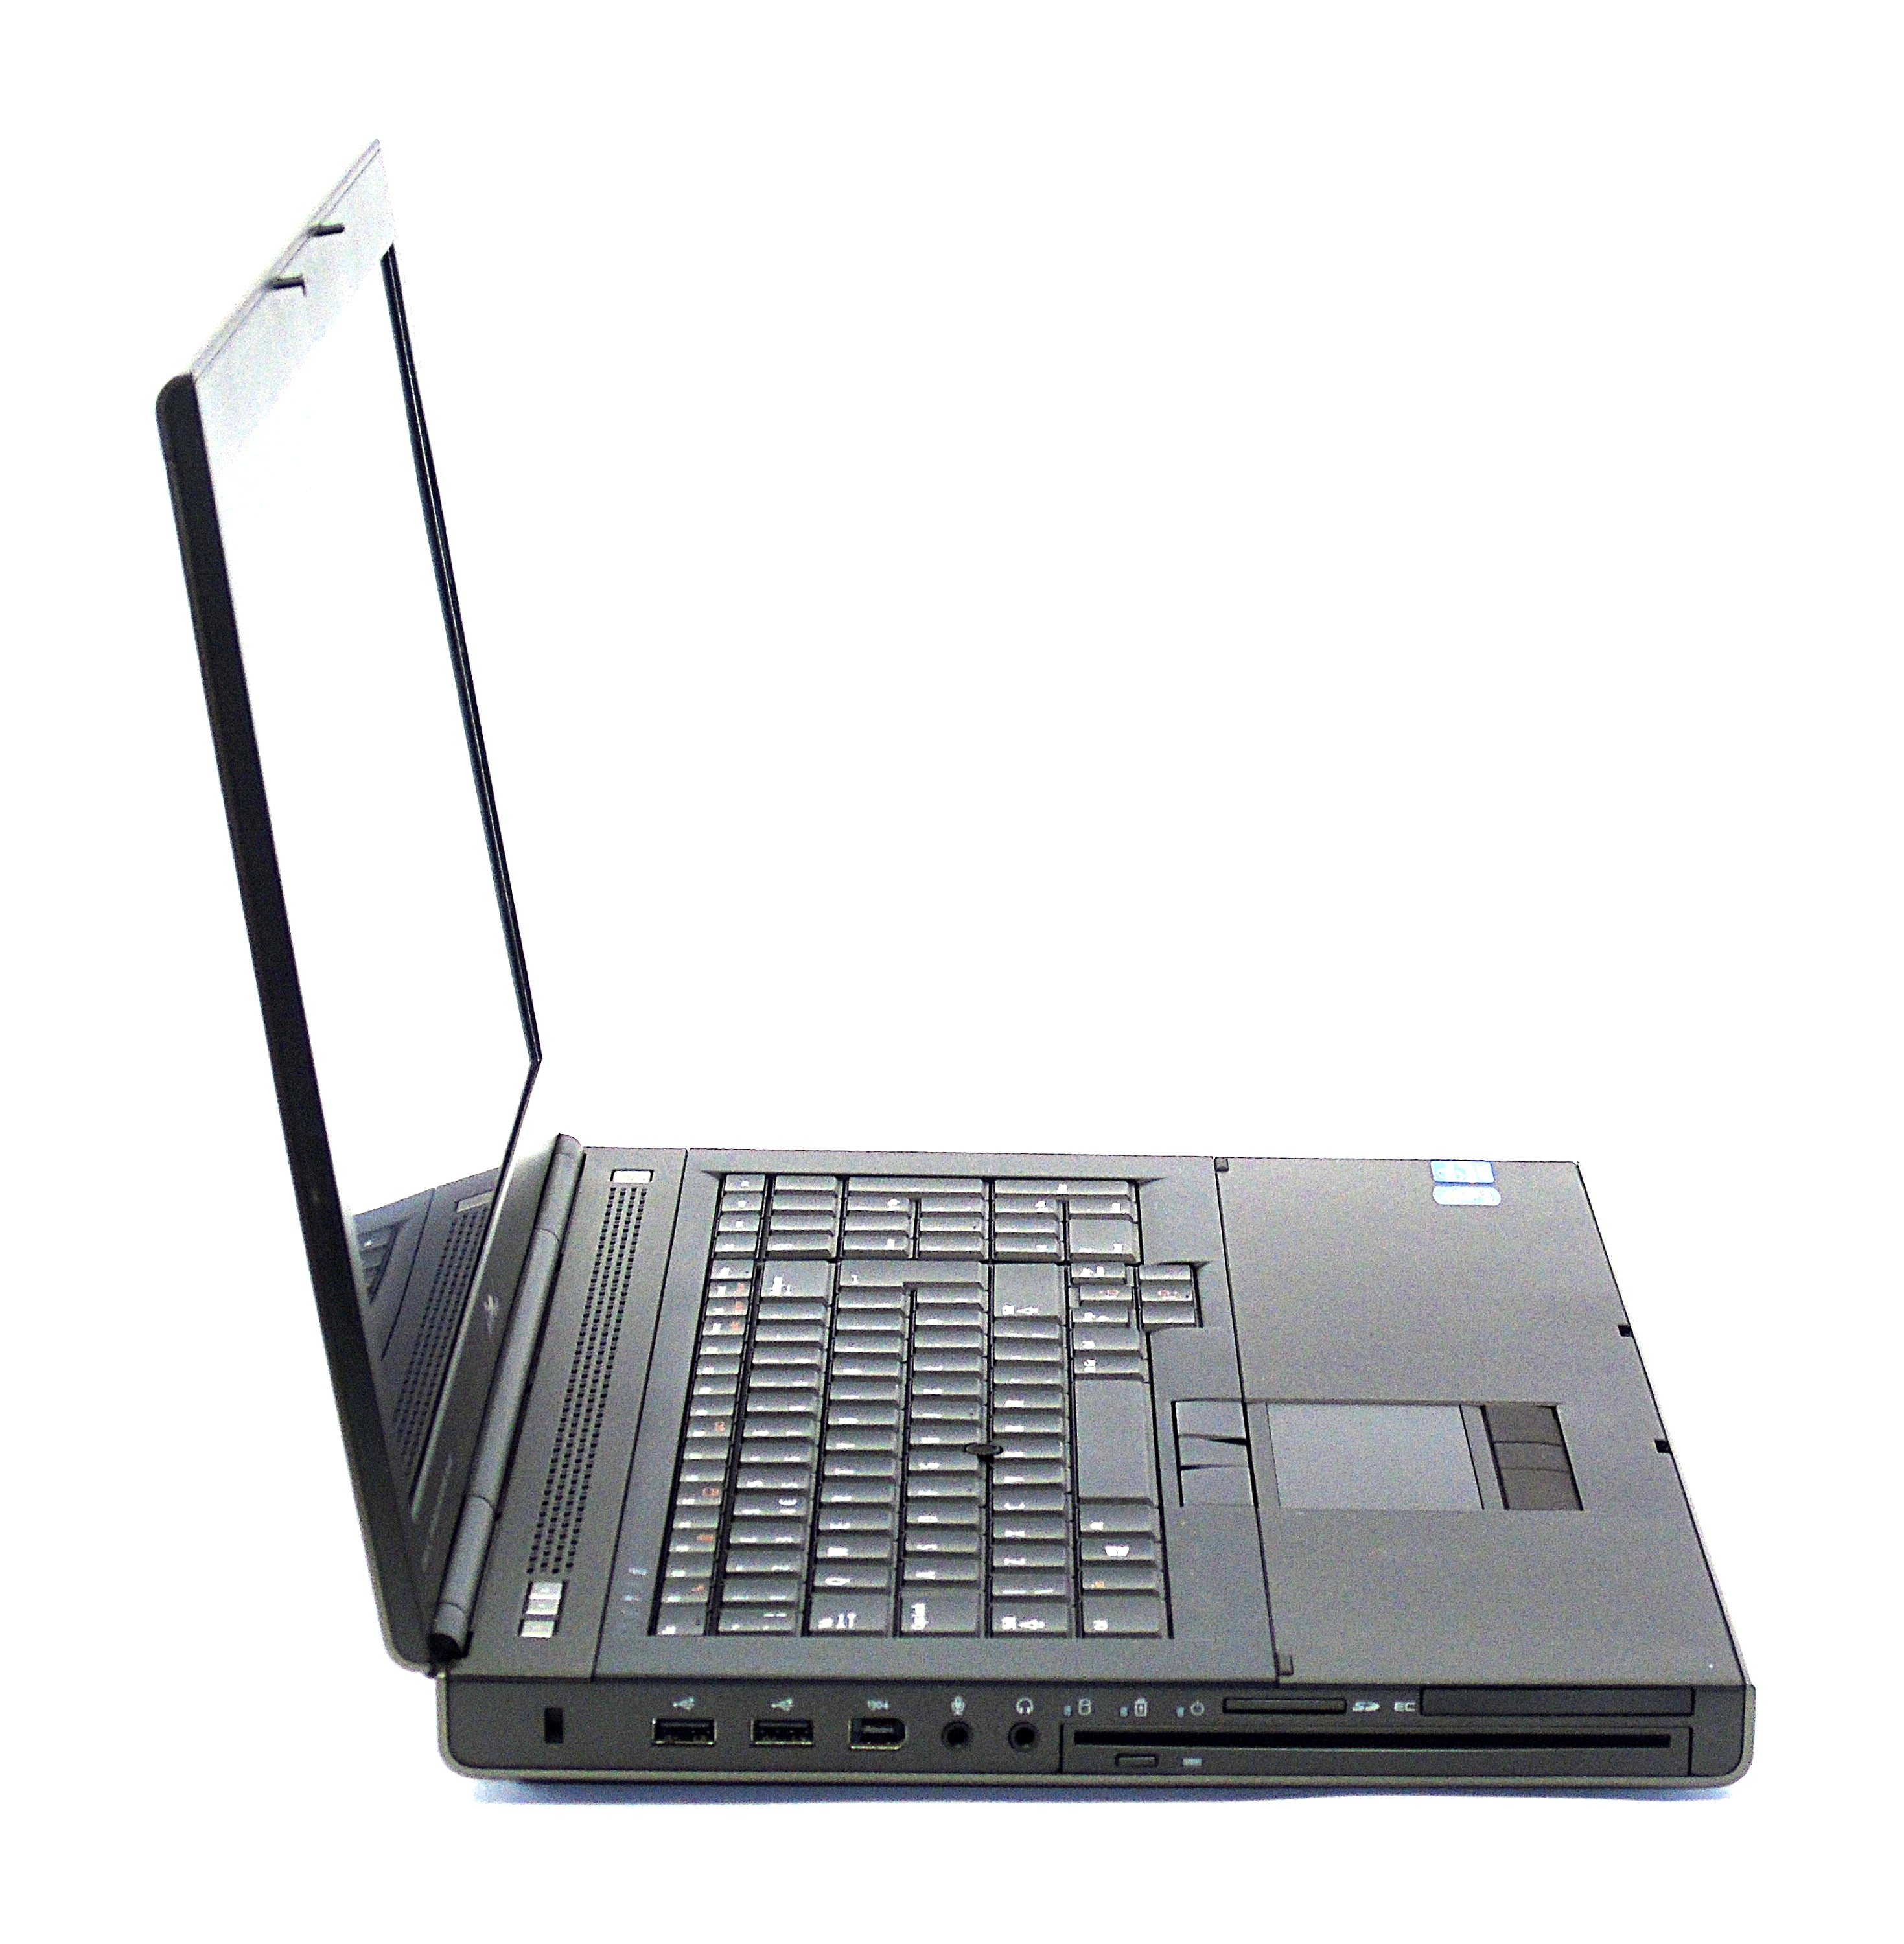 Dell Precision M6700 Laptop, 17.3" i7 3rd Gen, 8GB RAM, 512GB SSD